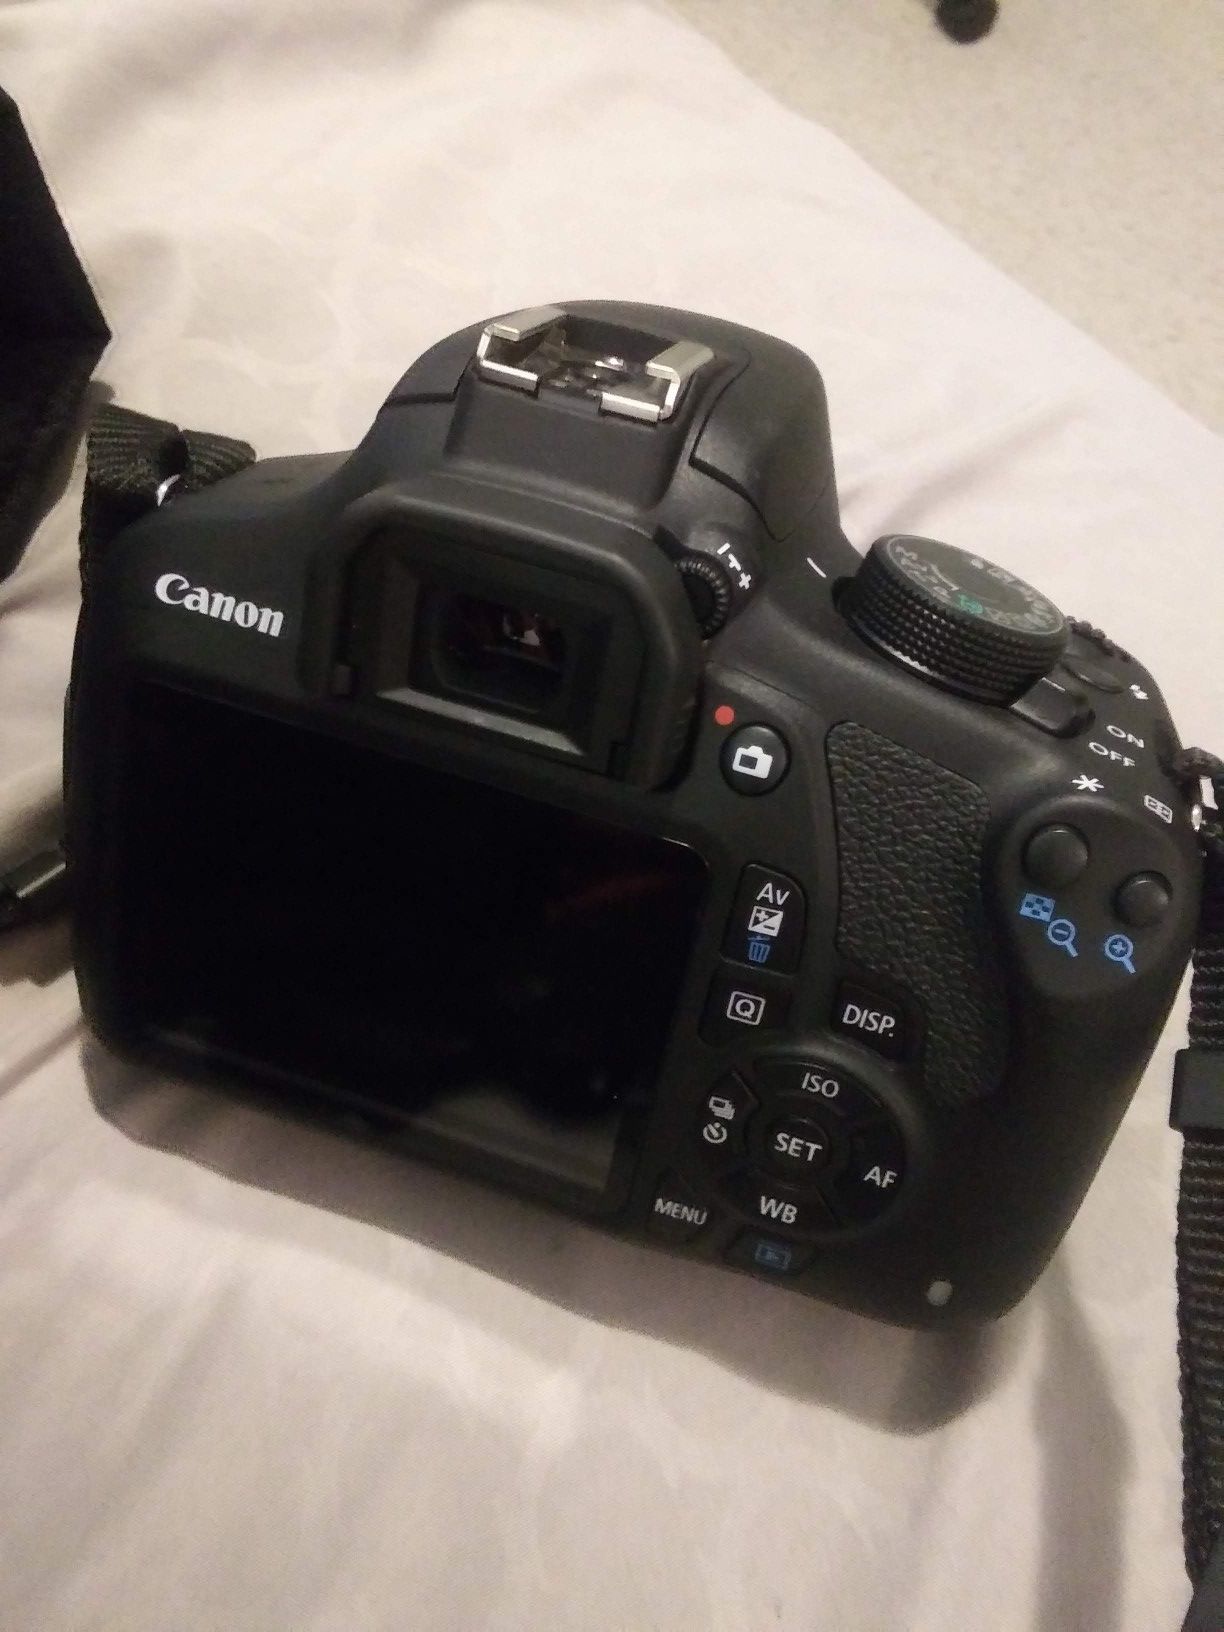 Canon EOS digital camera with bag